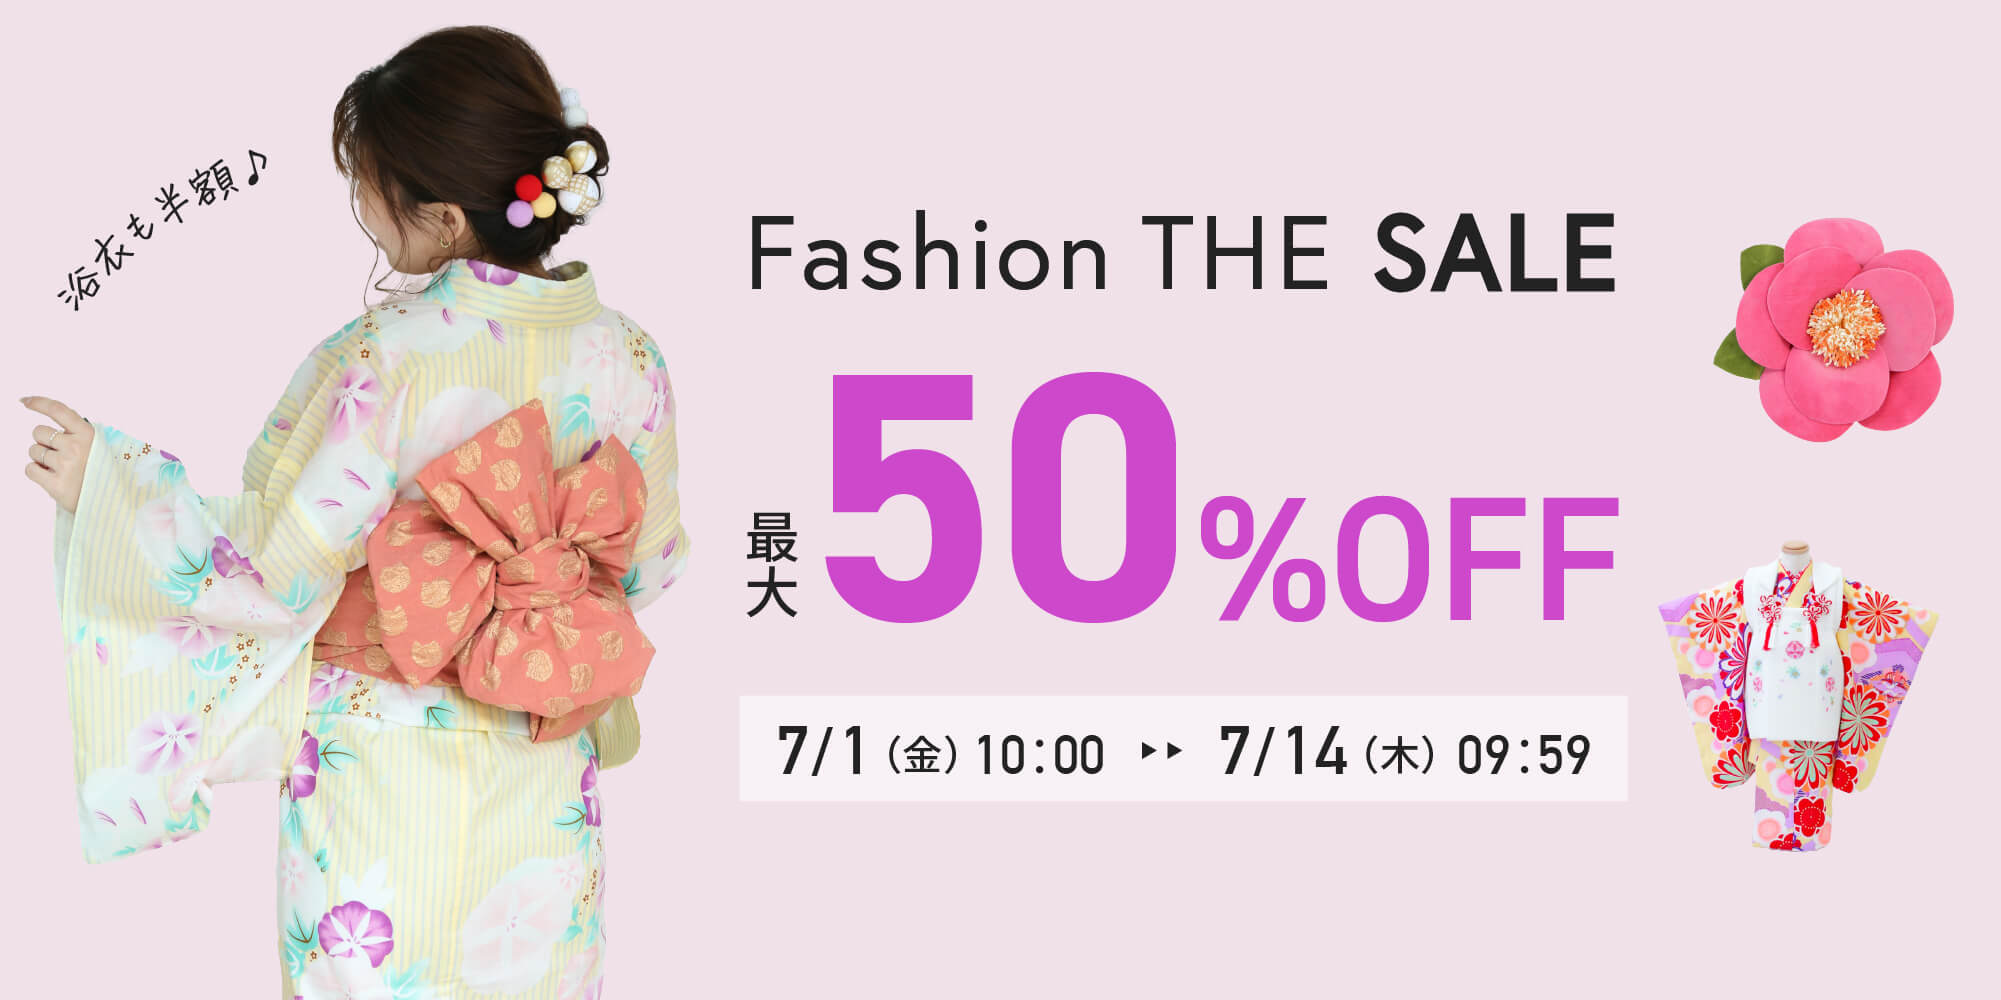 Rakuten fashion THE SALE 最大50%OFF